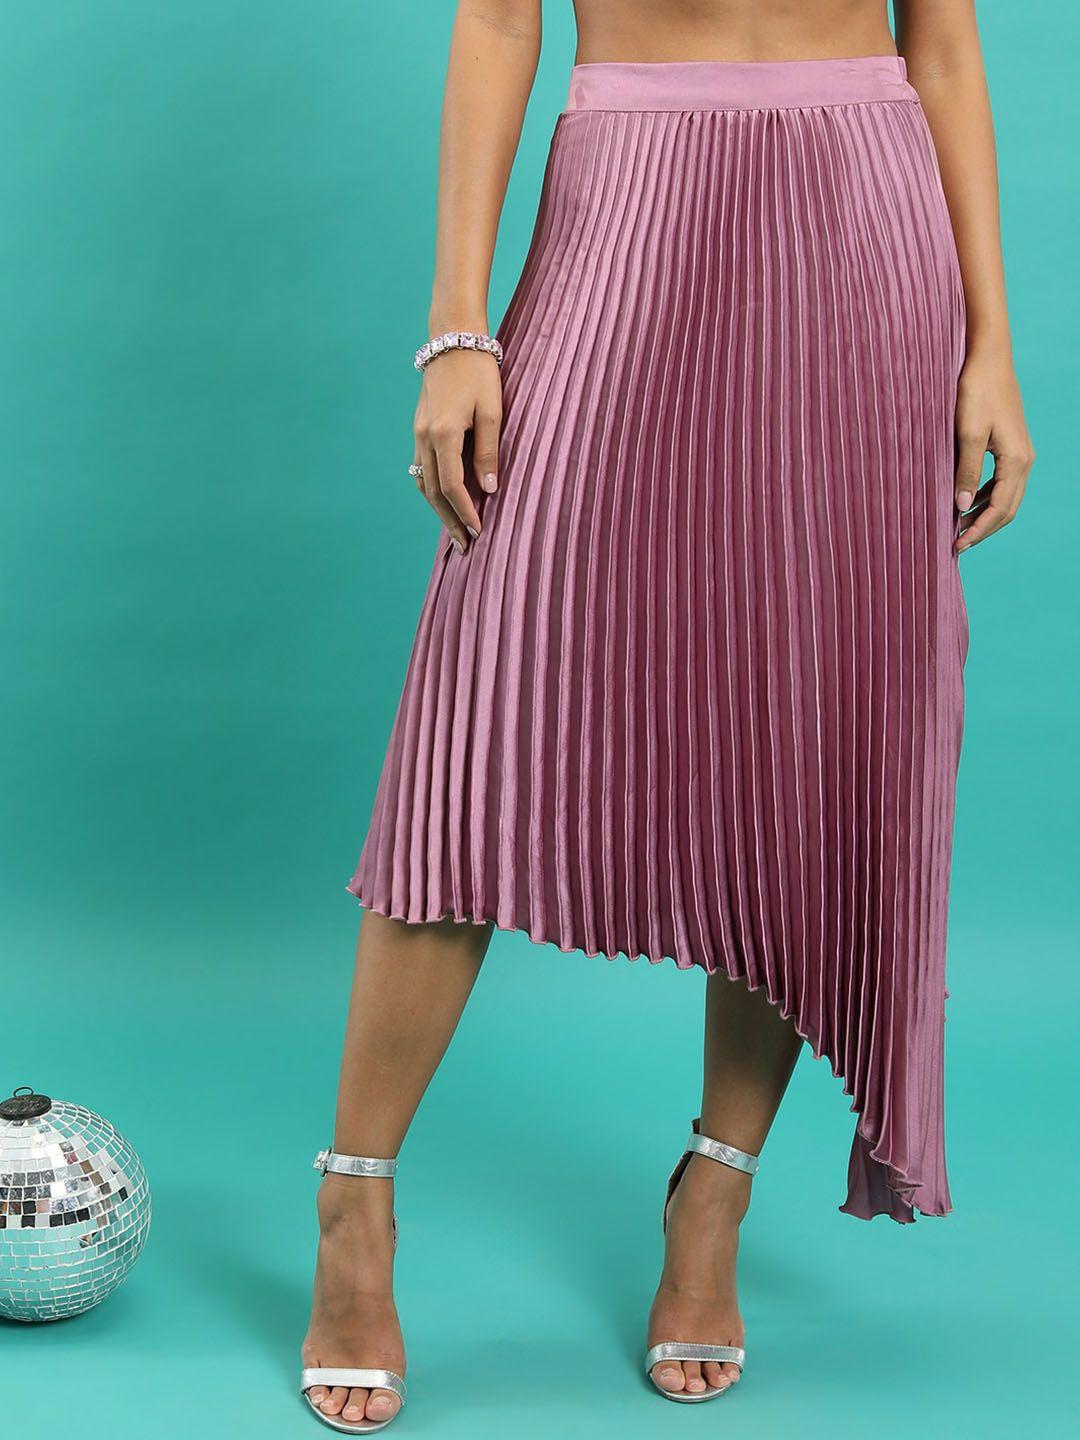 ketch-high-accordion-pleated-high-low-flared-midi-skirt